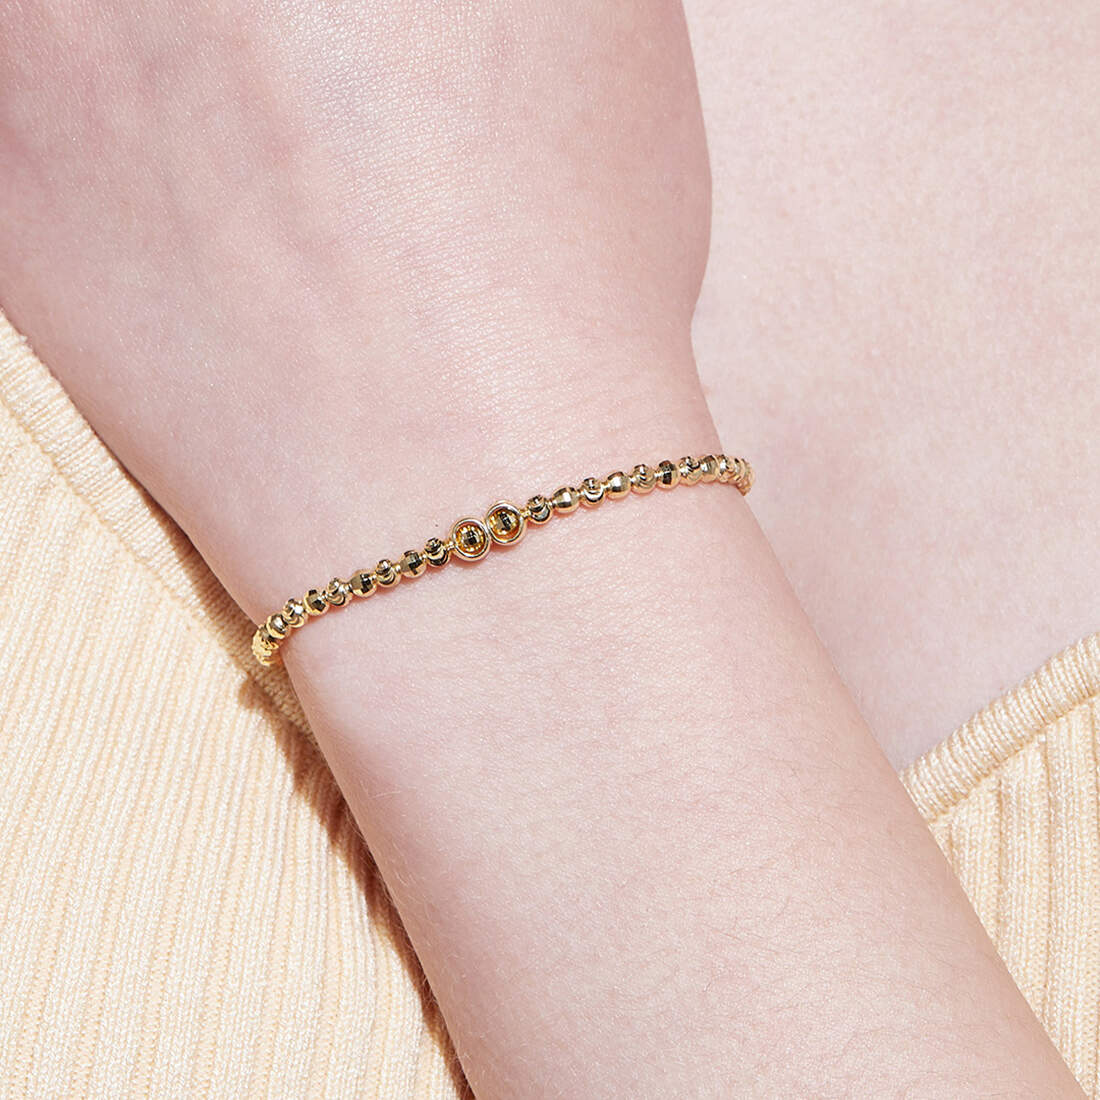 Golden Love Beads 925 Silver Stretchable Bracelet